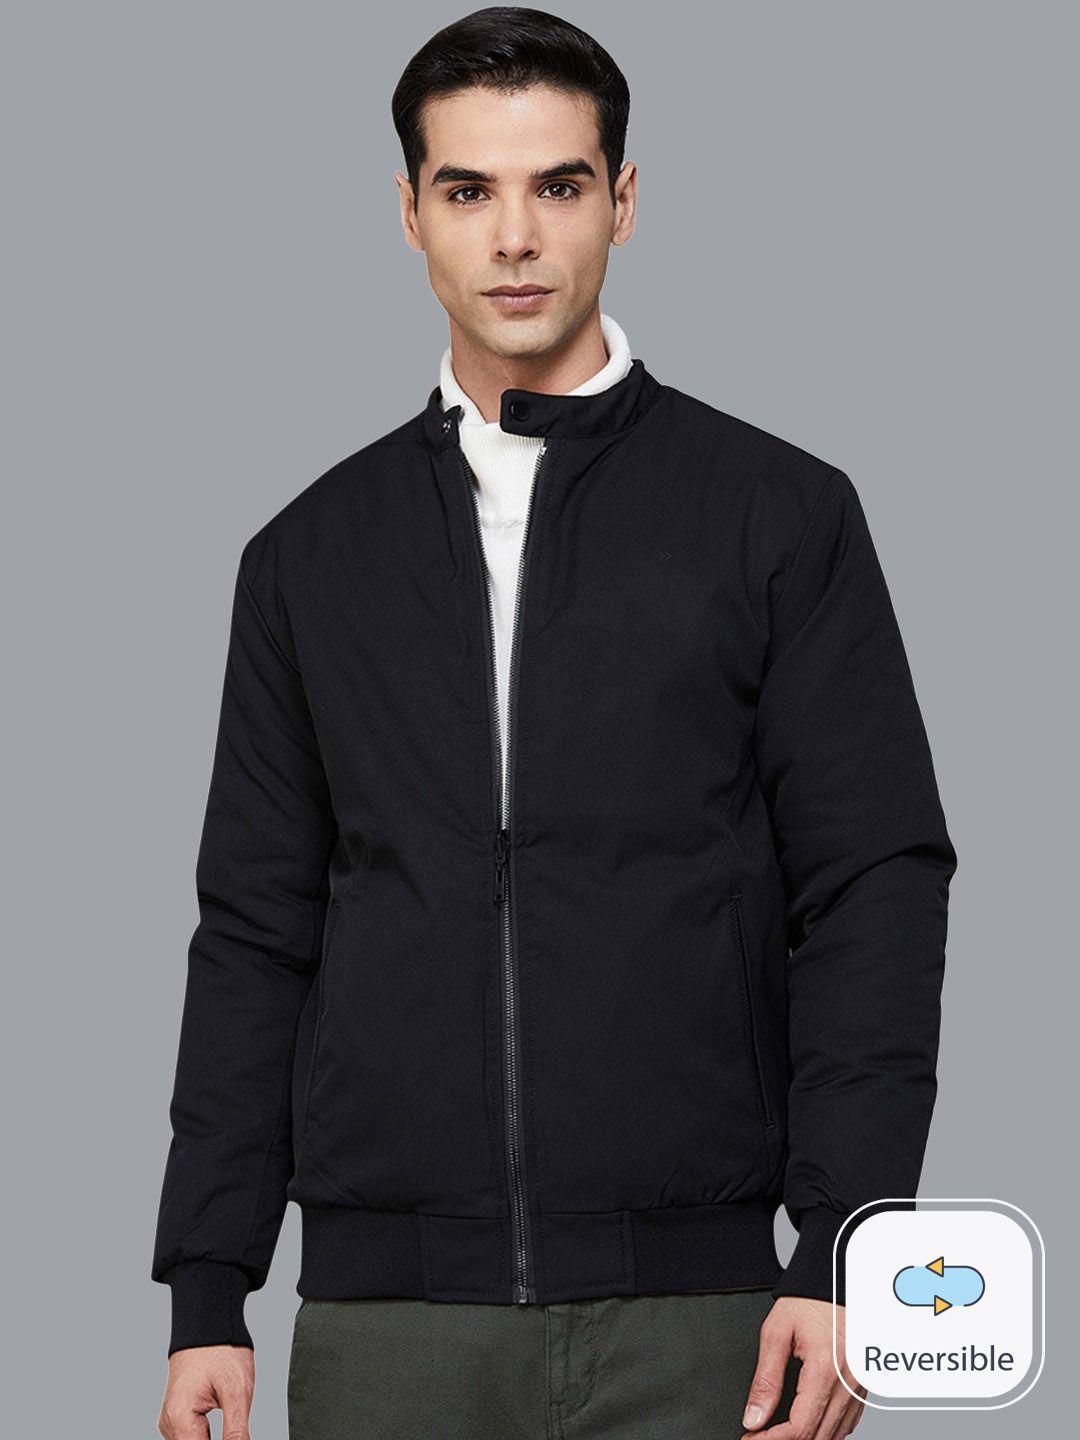 code-by-lifestyle-mandarin-collar-reversible-bomber-jacket